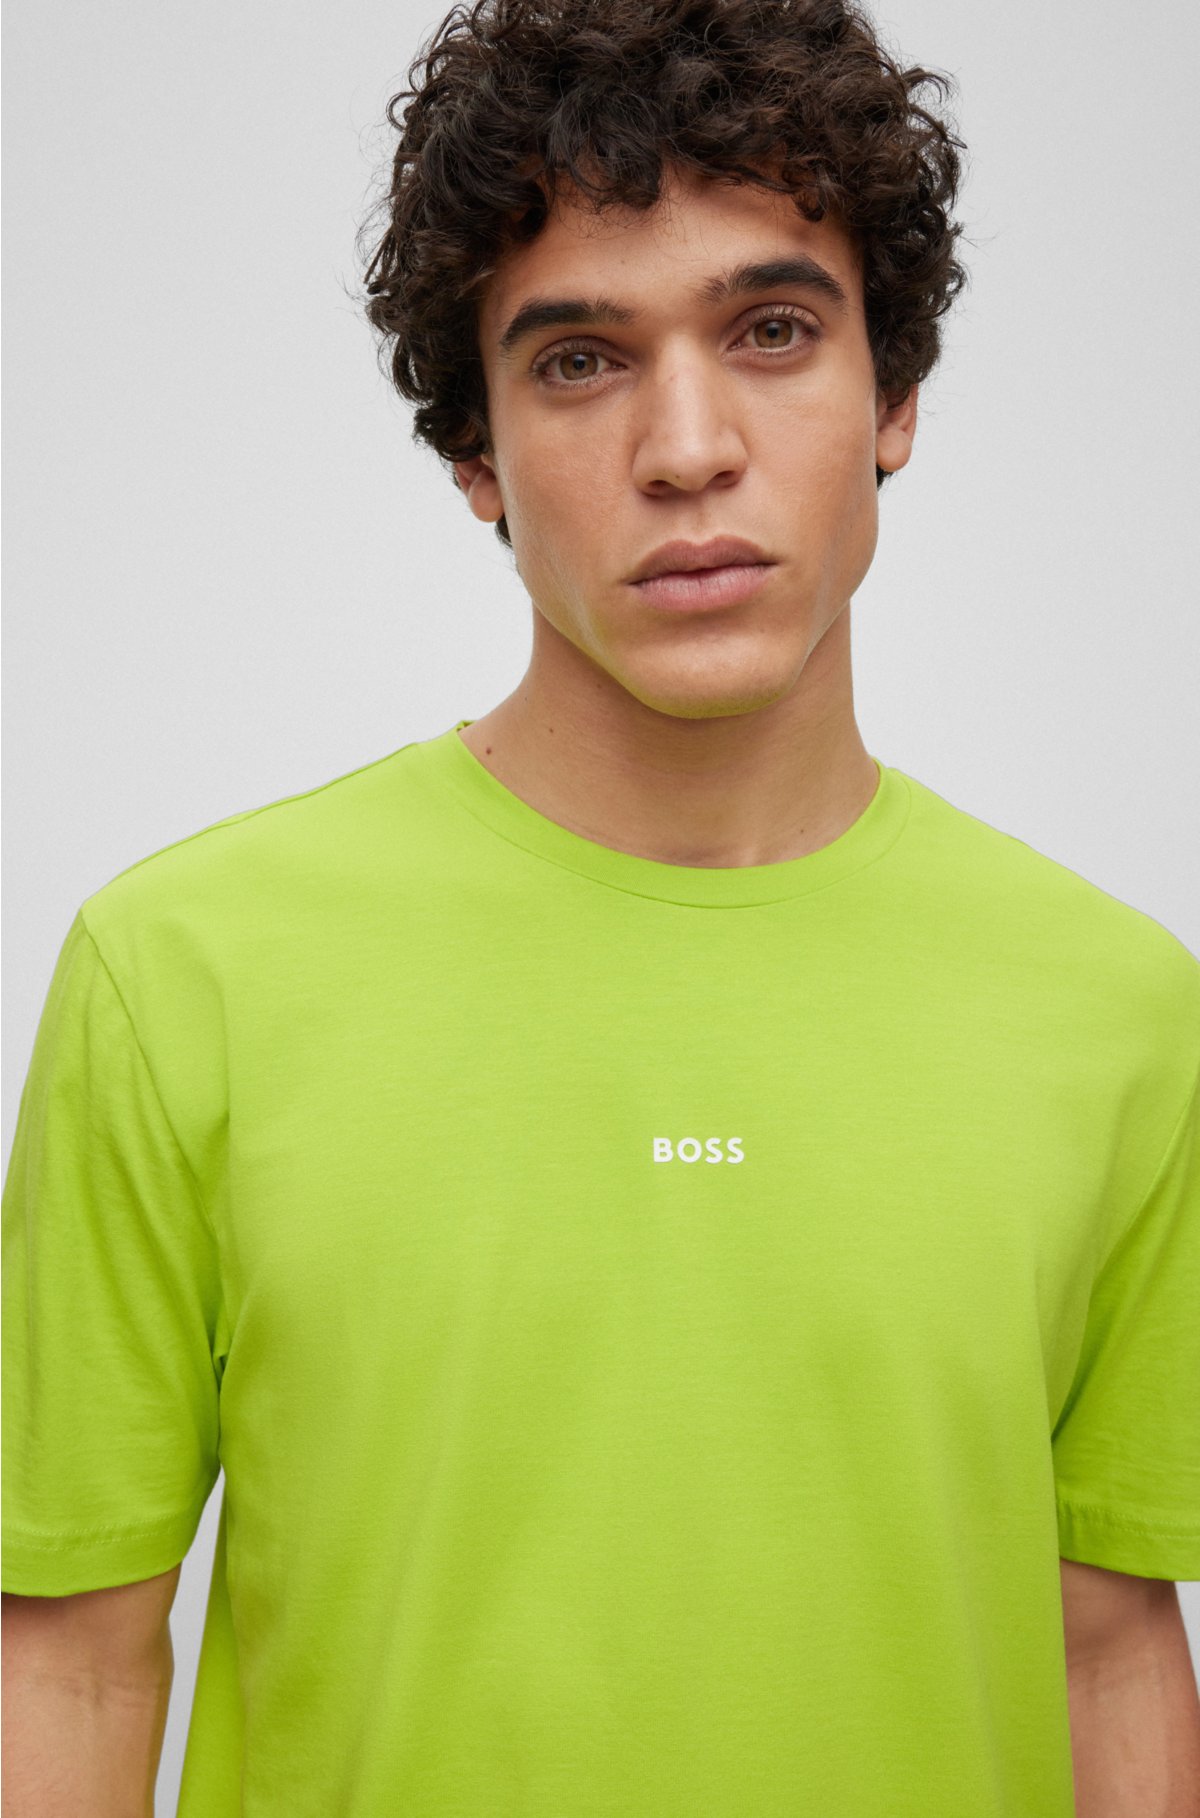 T-shirt Man Cotton Green, Men's Cactus T-shirt